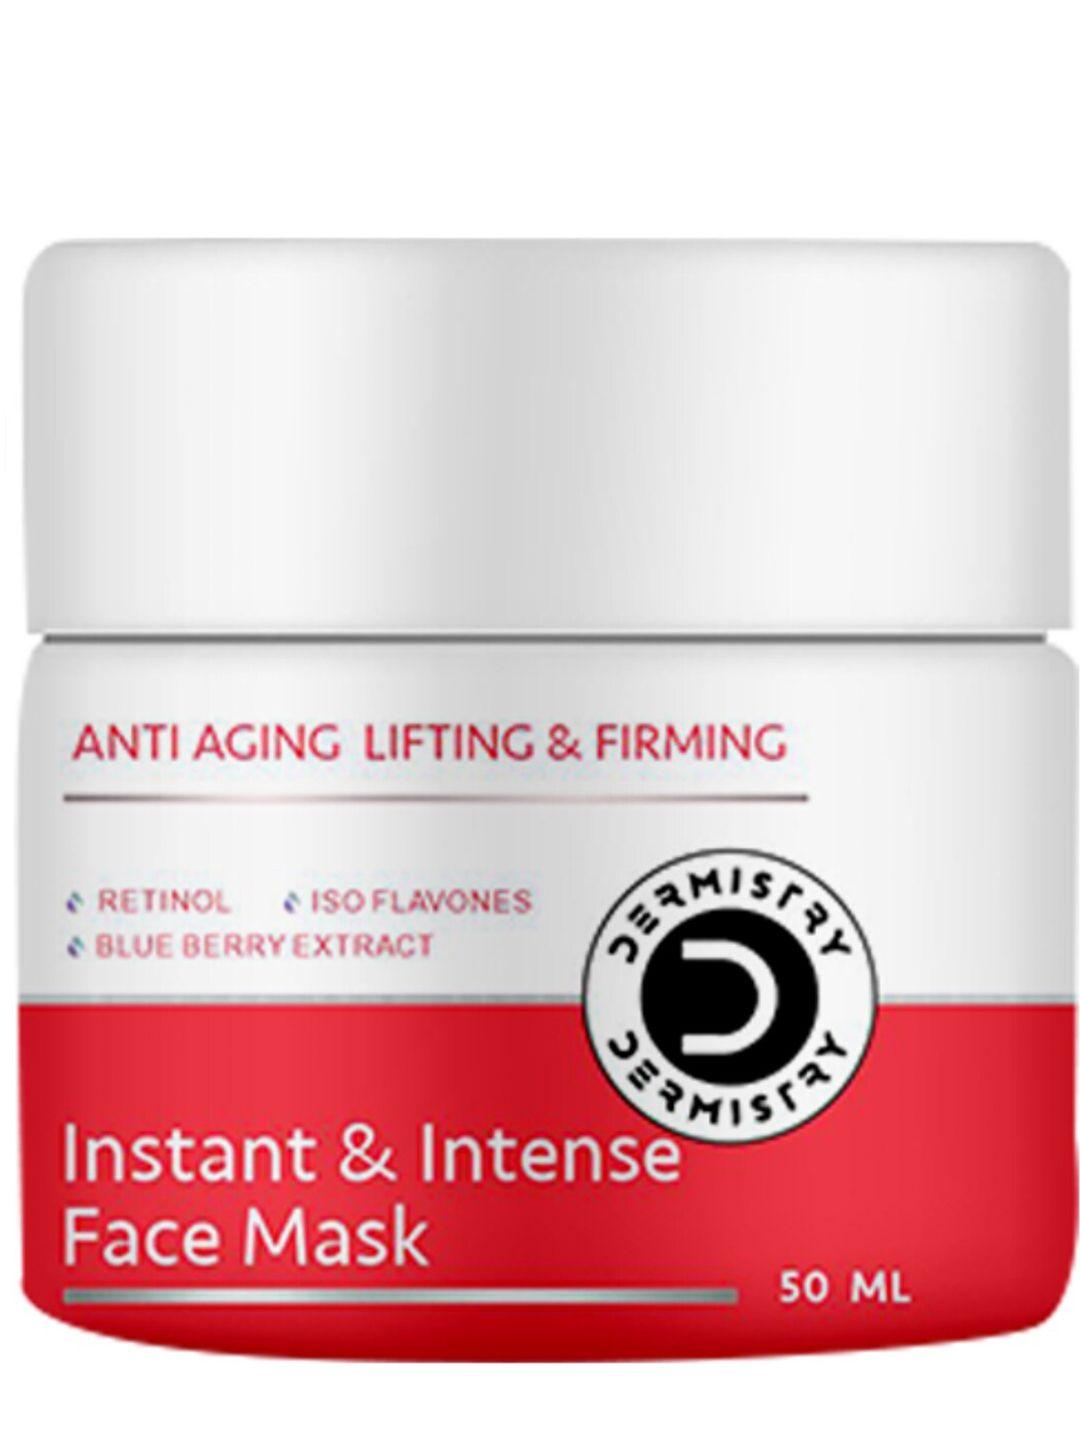 vigini dermistry anti aging lifting & firming instant intense face mask - 50ml